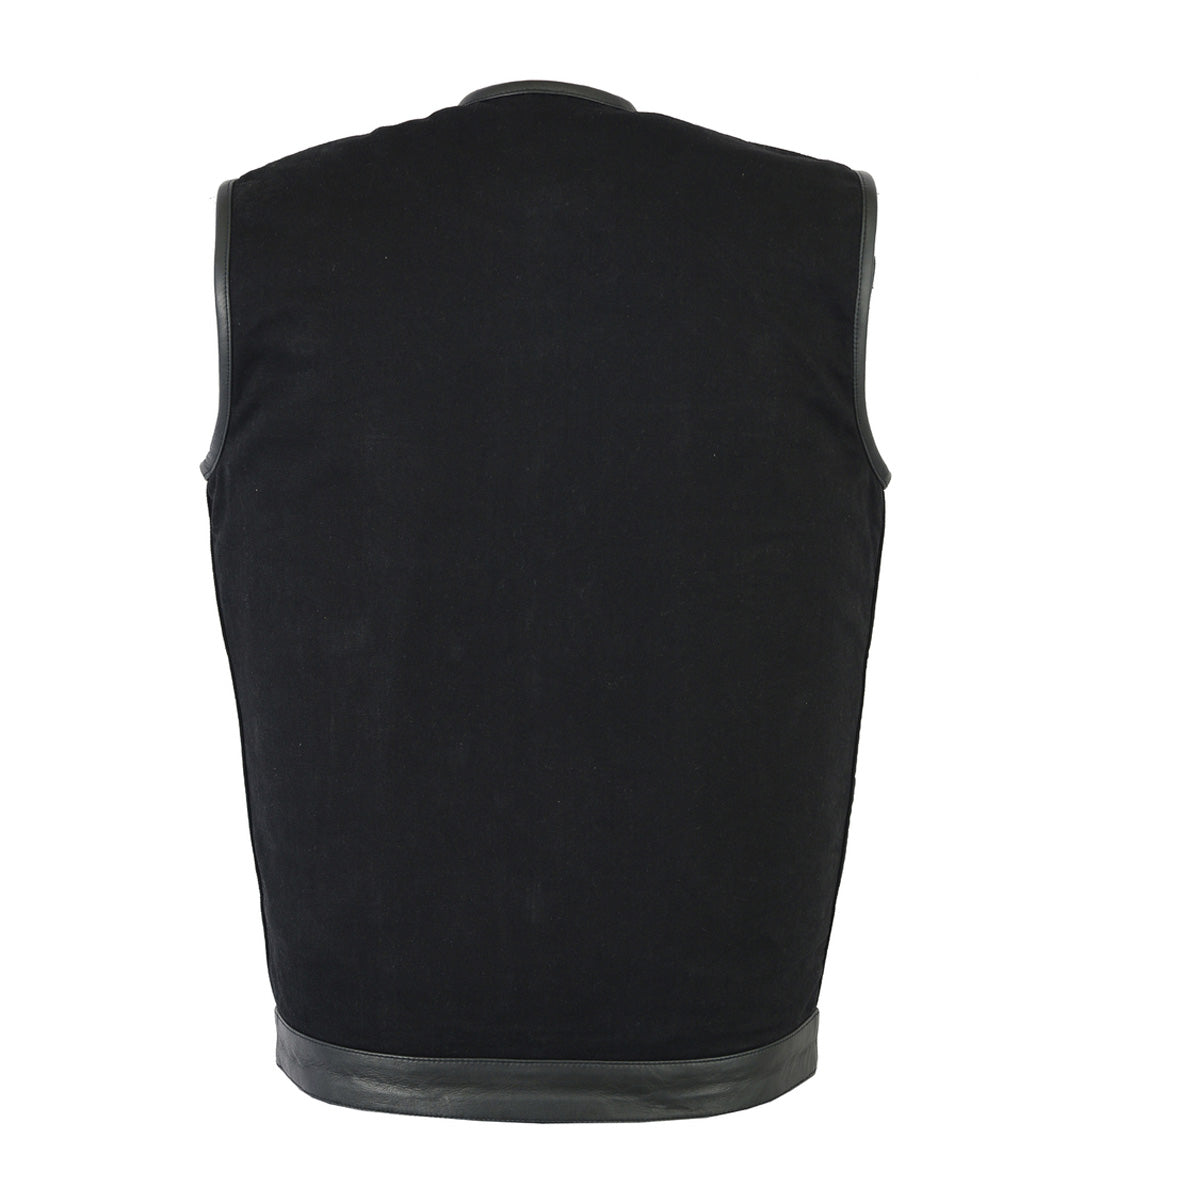 Men's Black Denim Single Panel Concealment Vest W/Leather Trim- w/o Collar